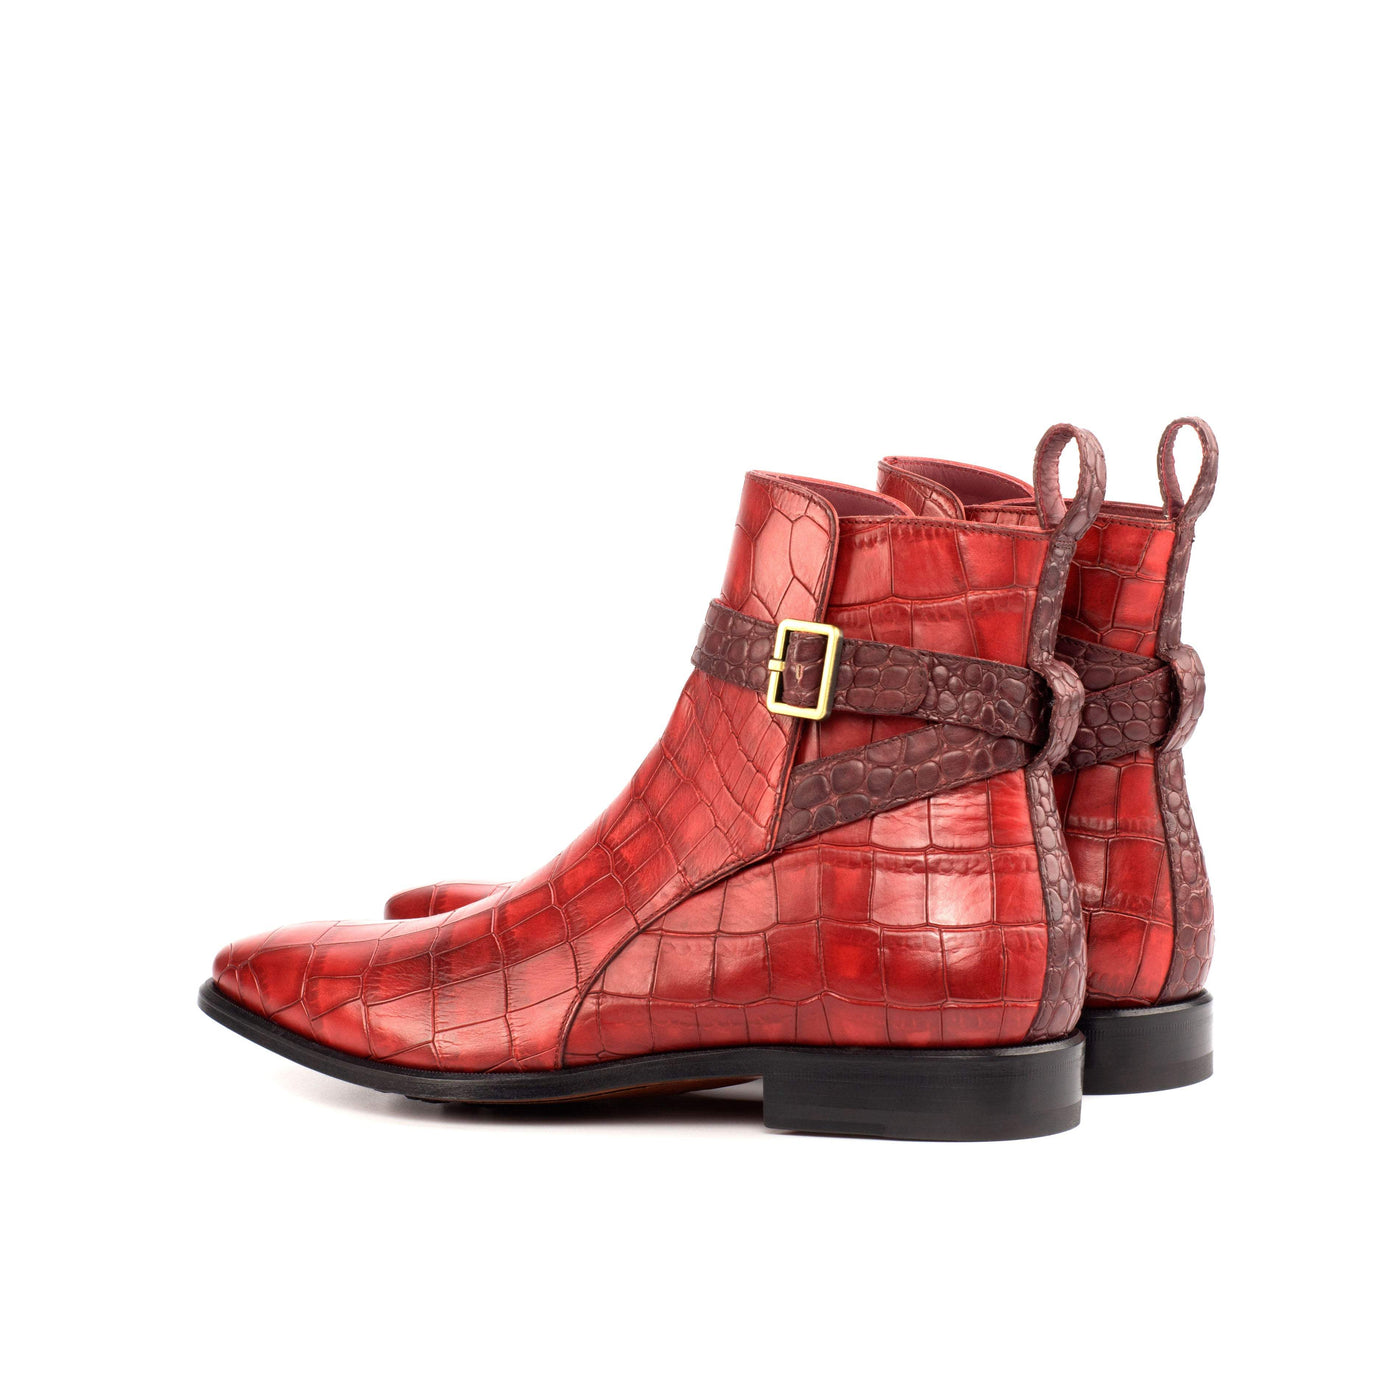 Men's Jodhpur Boots Leather Burgundy Red 4493 4- MERRIMIUM